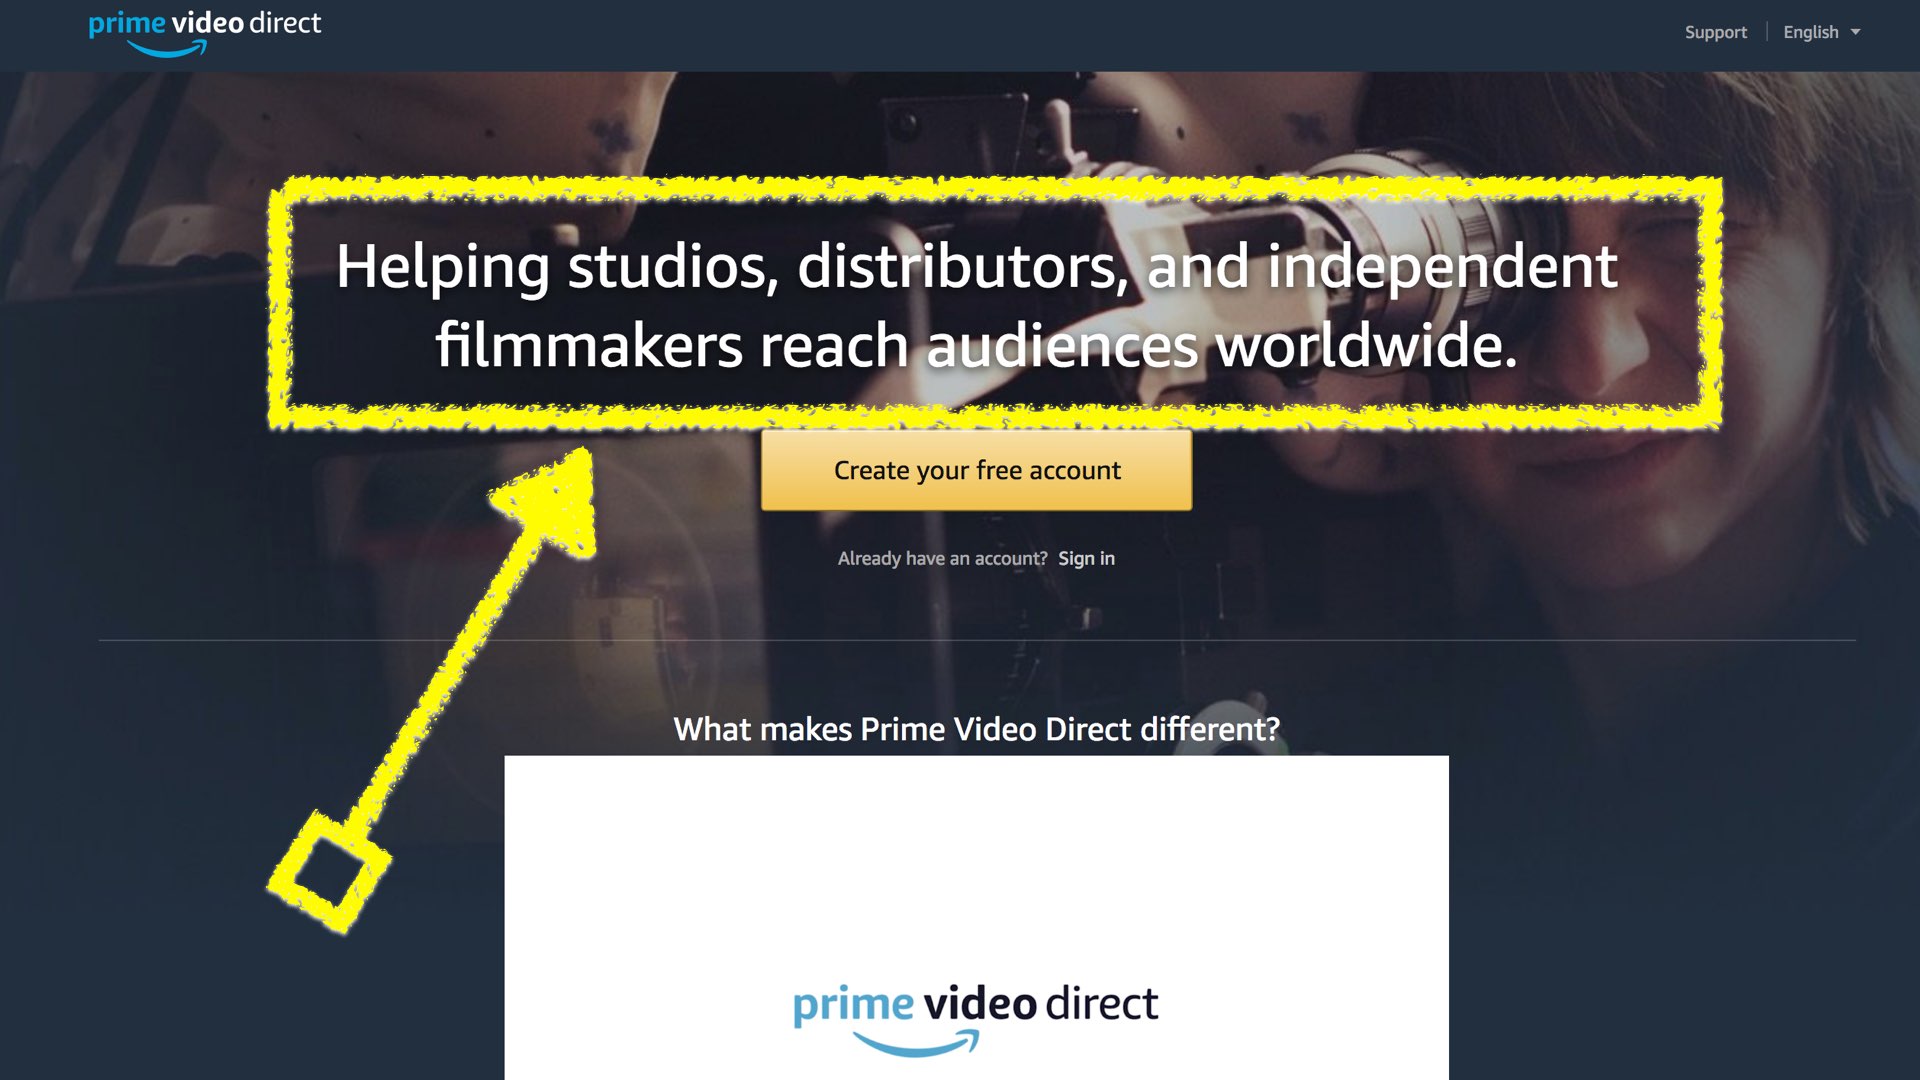 Amazon Prime Video Direct statement